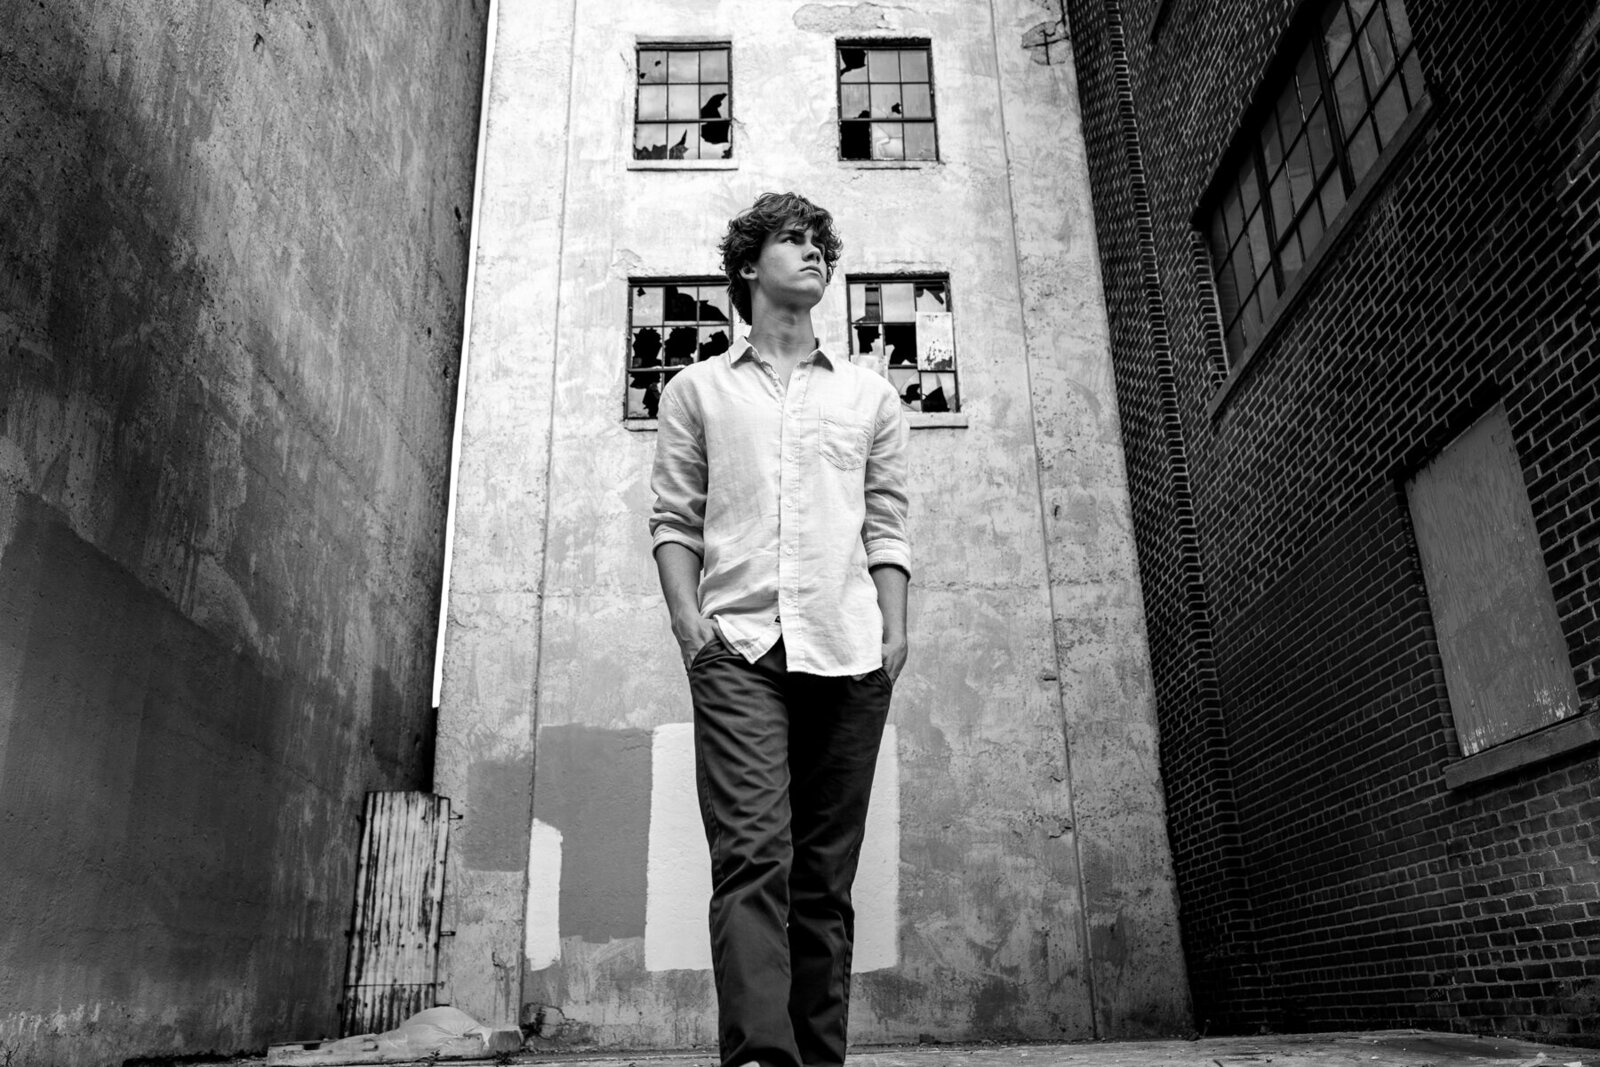 Wayzata Minnesota high school grad photo of boy in white shirt in urban city scene